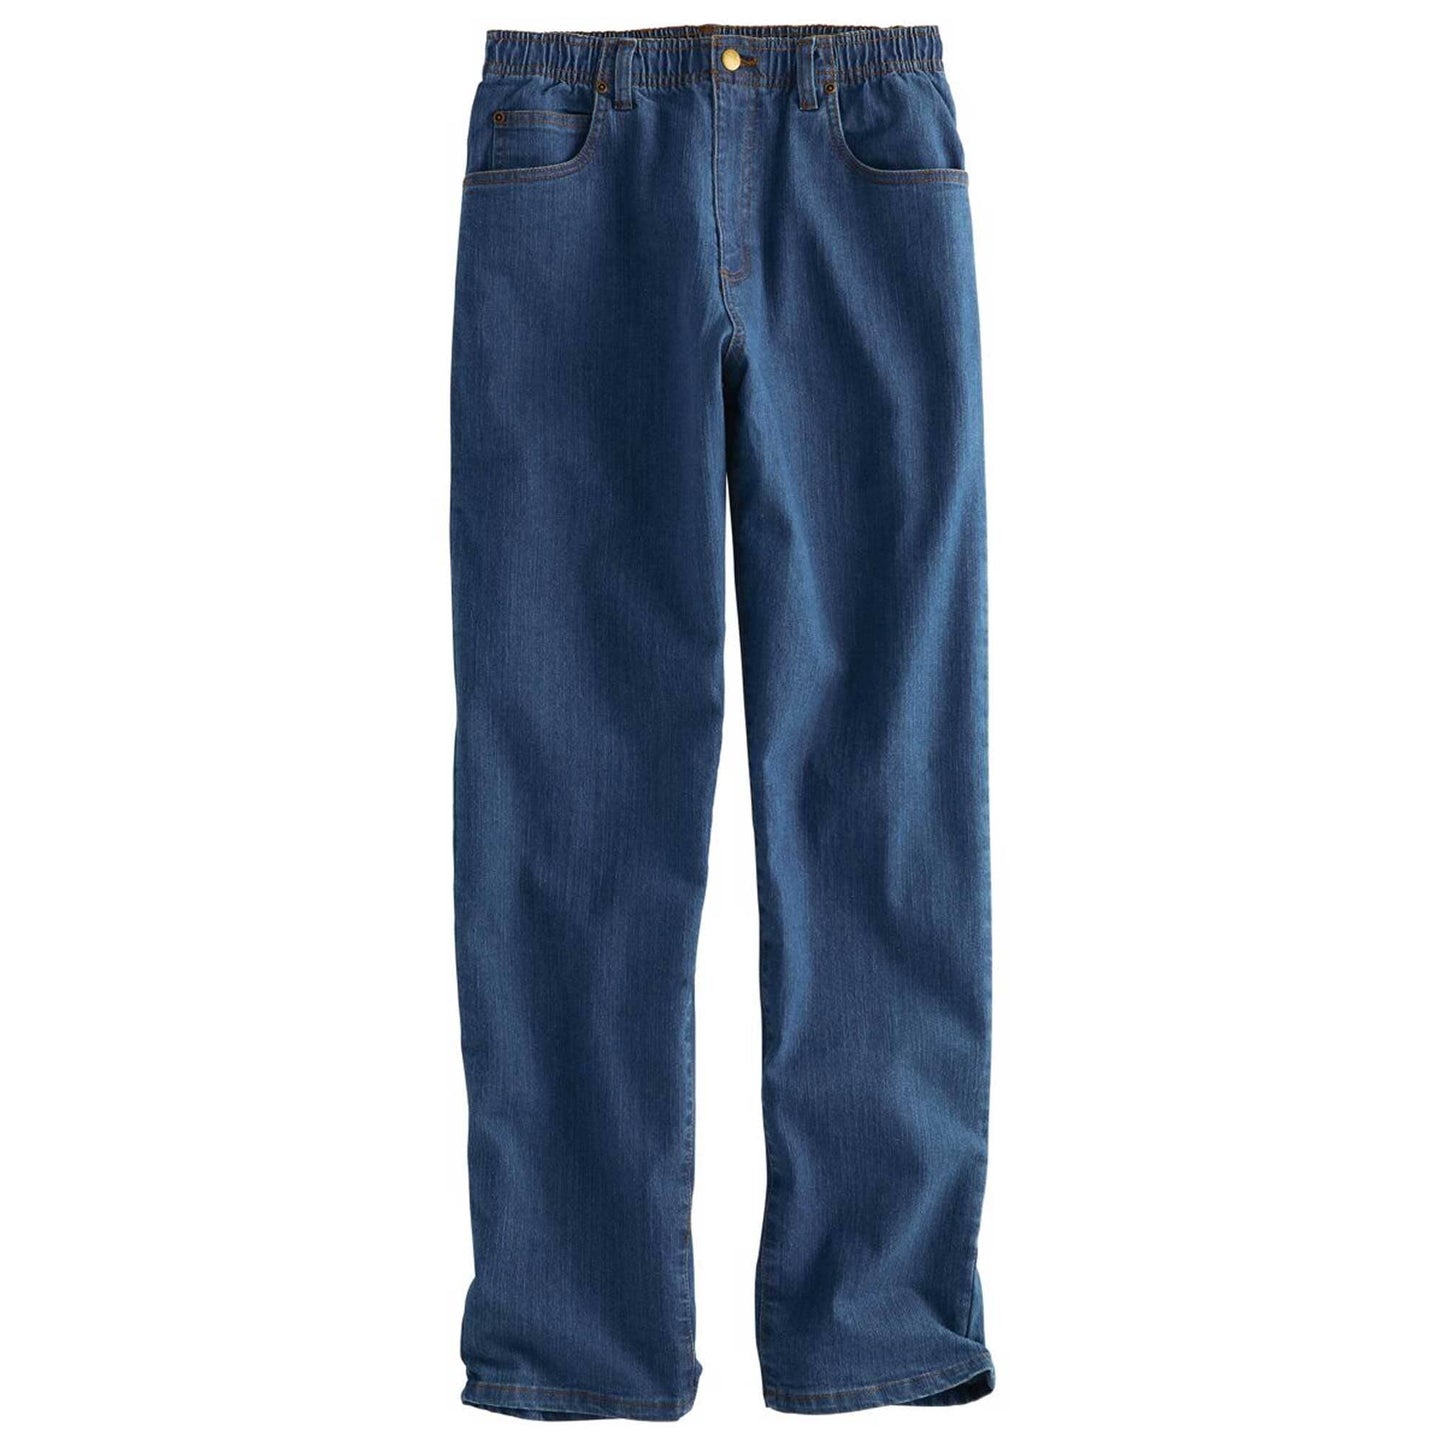 Haband Joe Men's Regular Fit Denim Pants - Authentic Style & Comfort Men's Denim SNR 